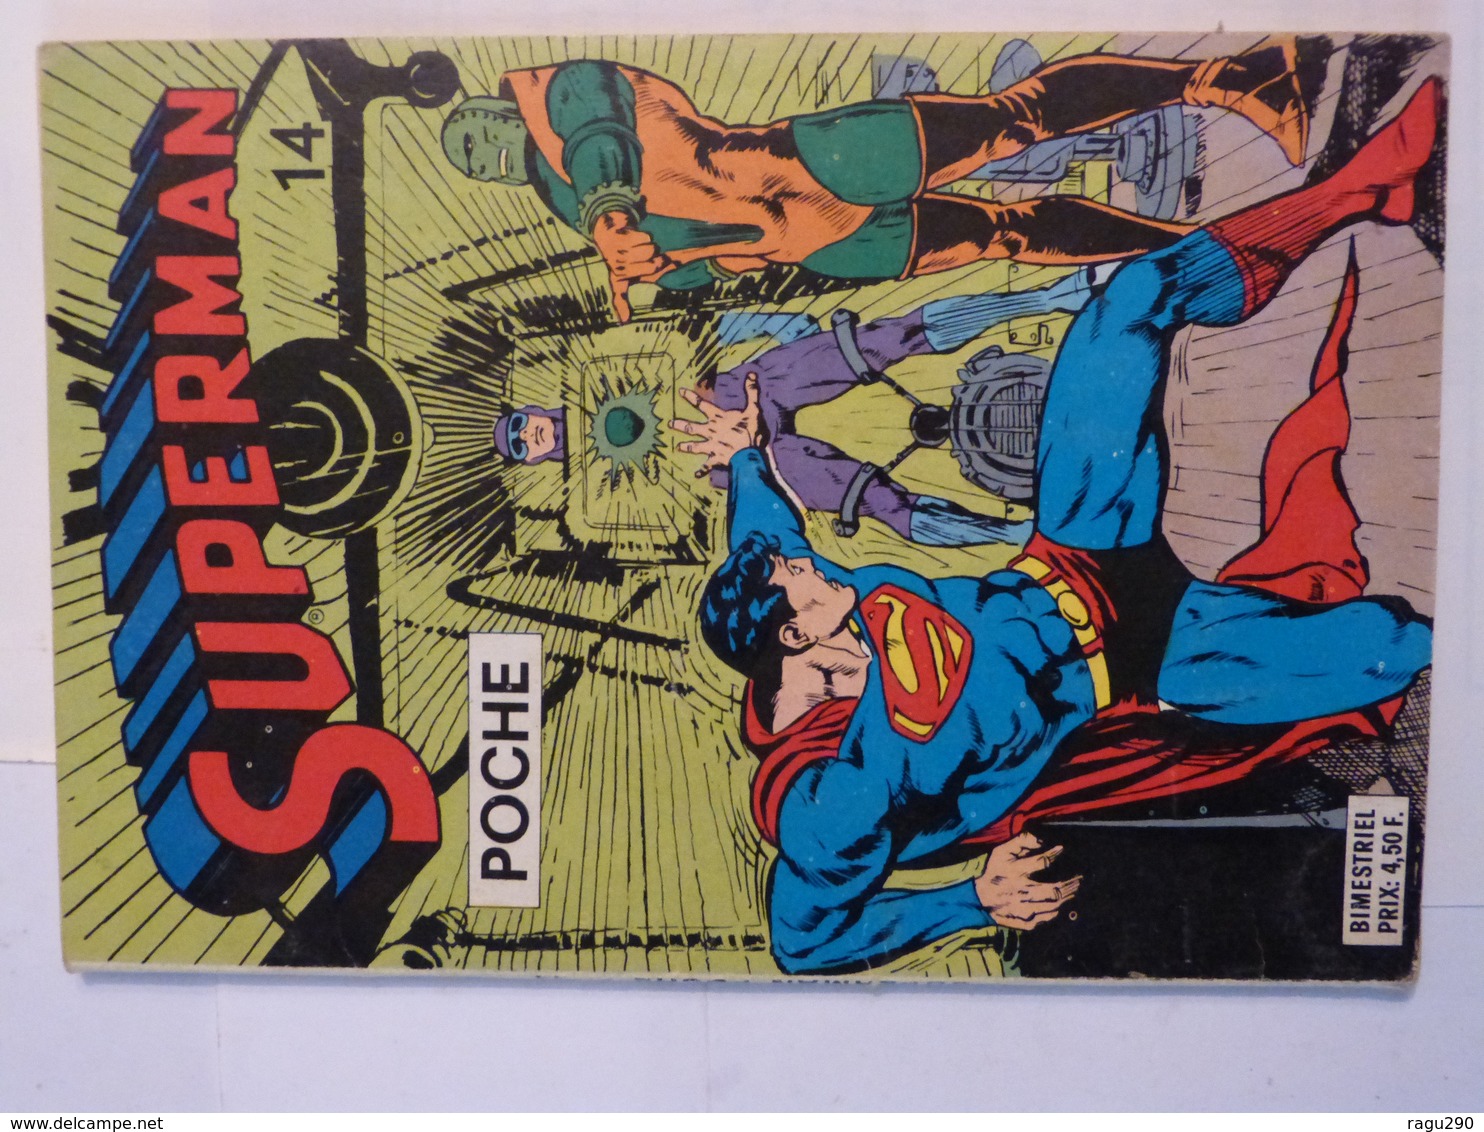 BD  ---  SUPERMAN POCHE N° 14 - Superman